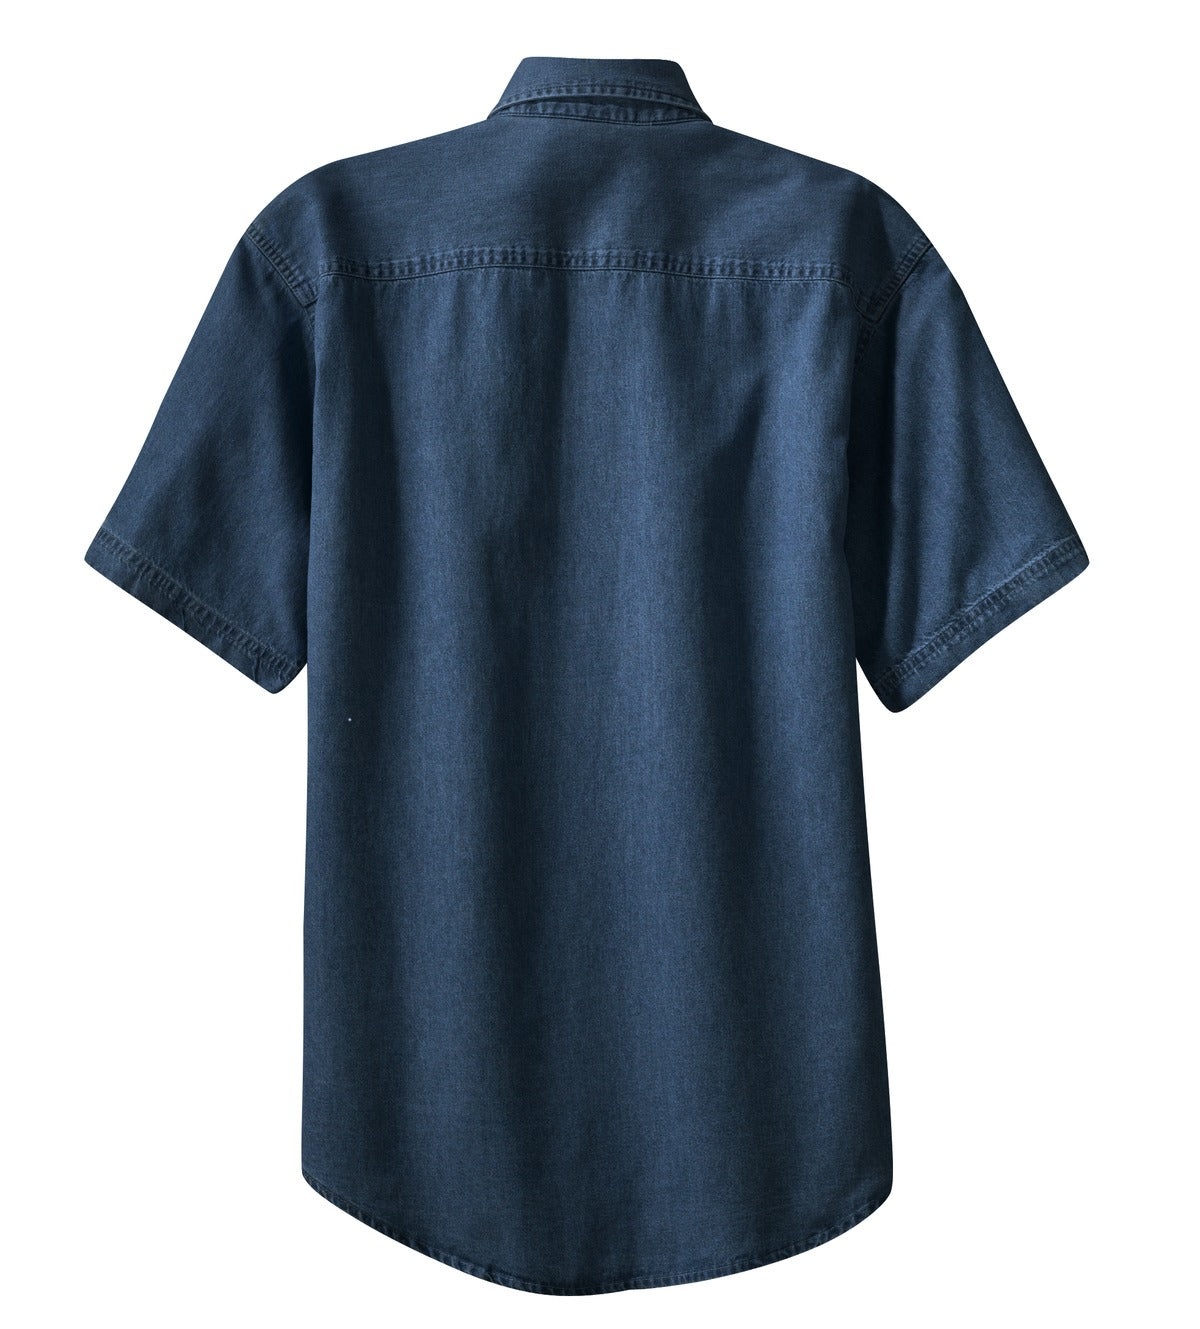 Port & Company - Short Sleeve Value Denim Shirt. SP11